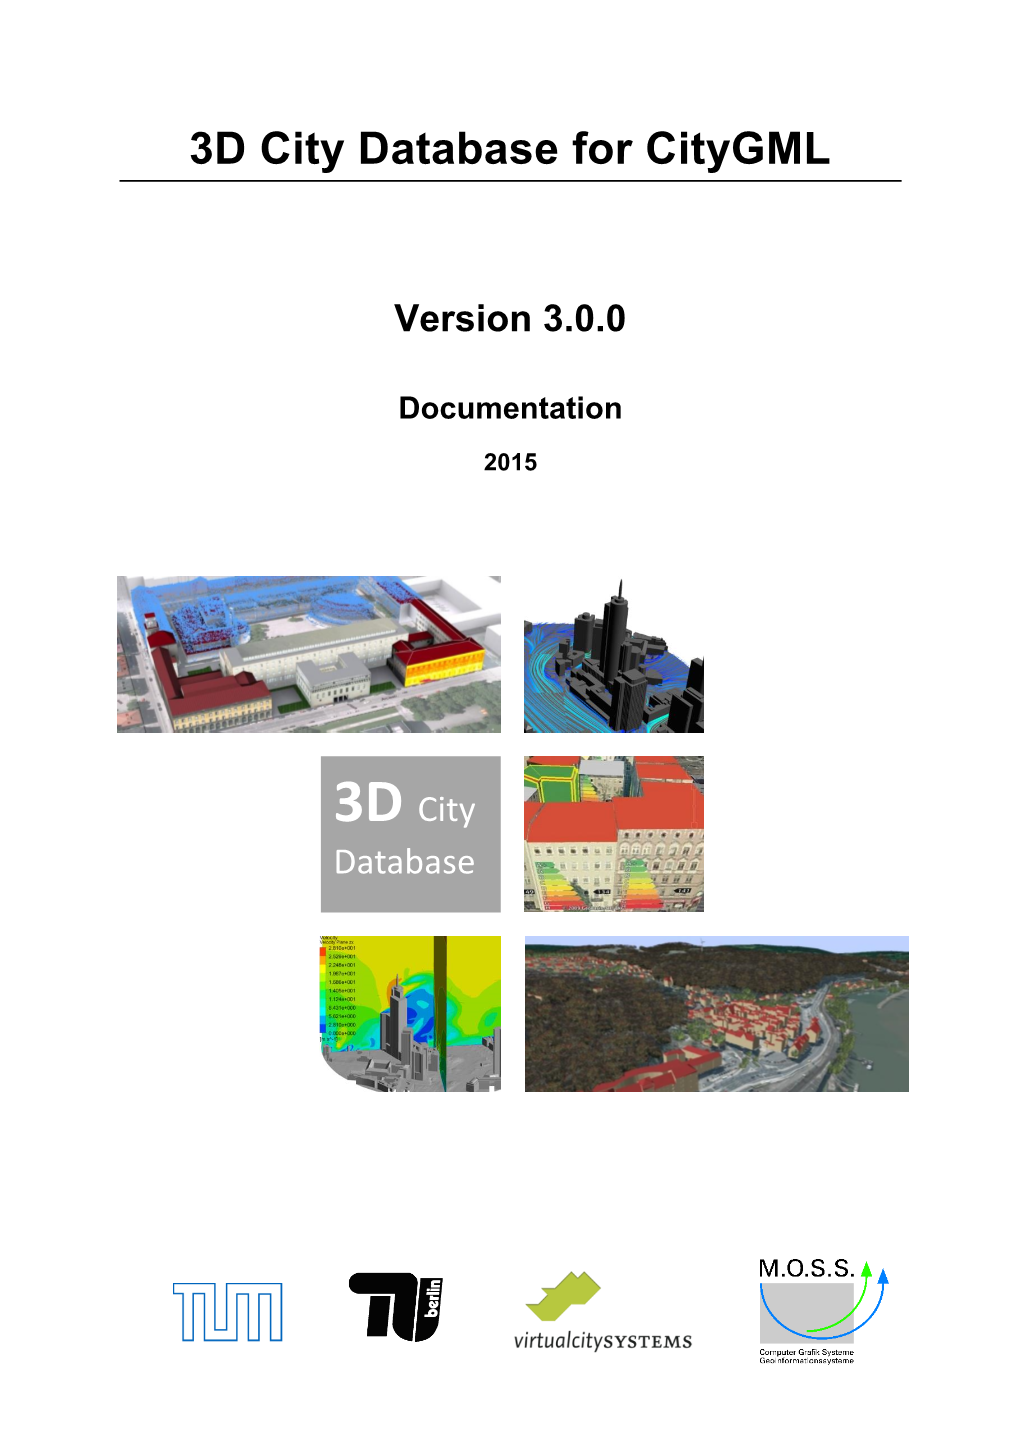 3Dcitydb Version 3.0.0 Documentation